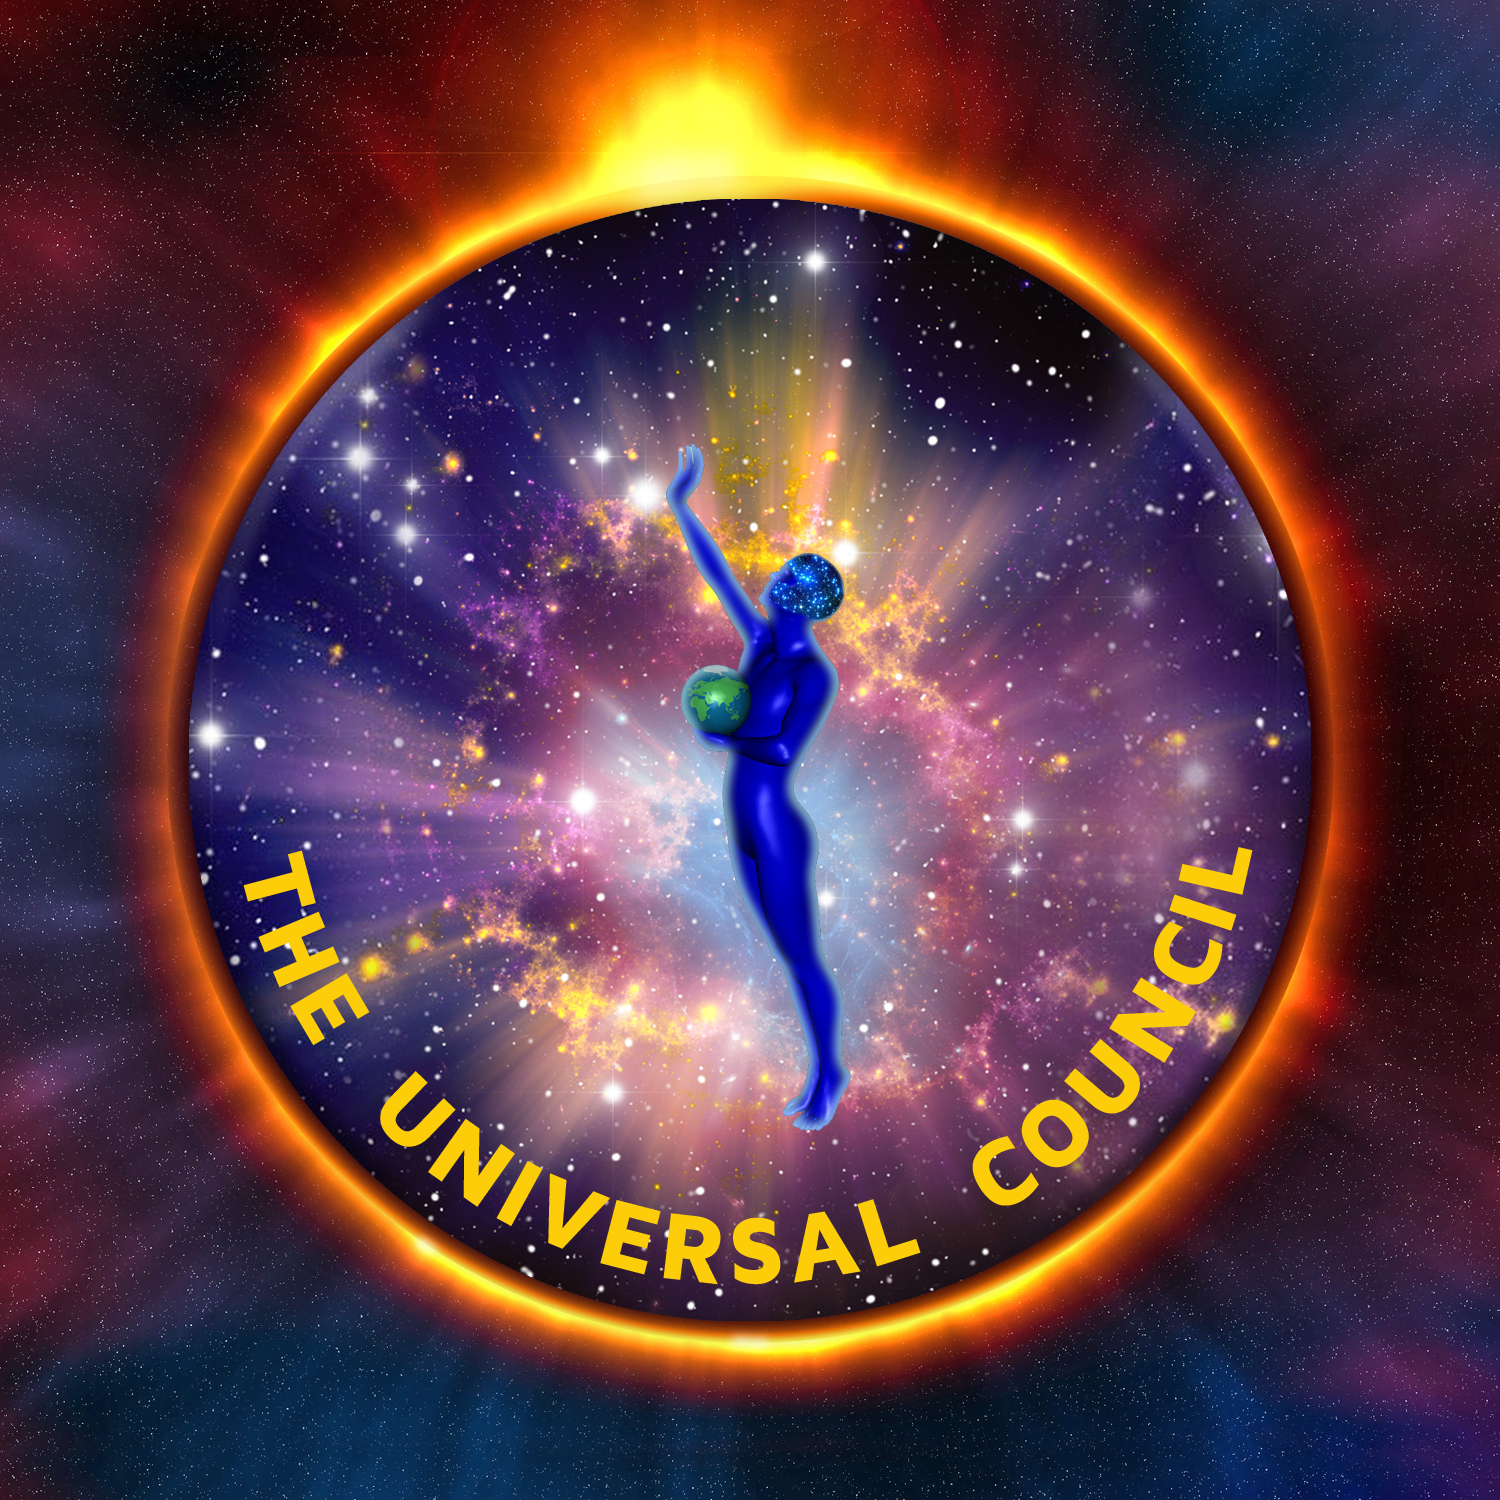 universal-council-logo-square-v4-rgb-merged-final.jpg